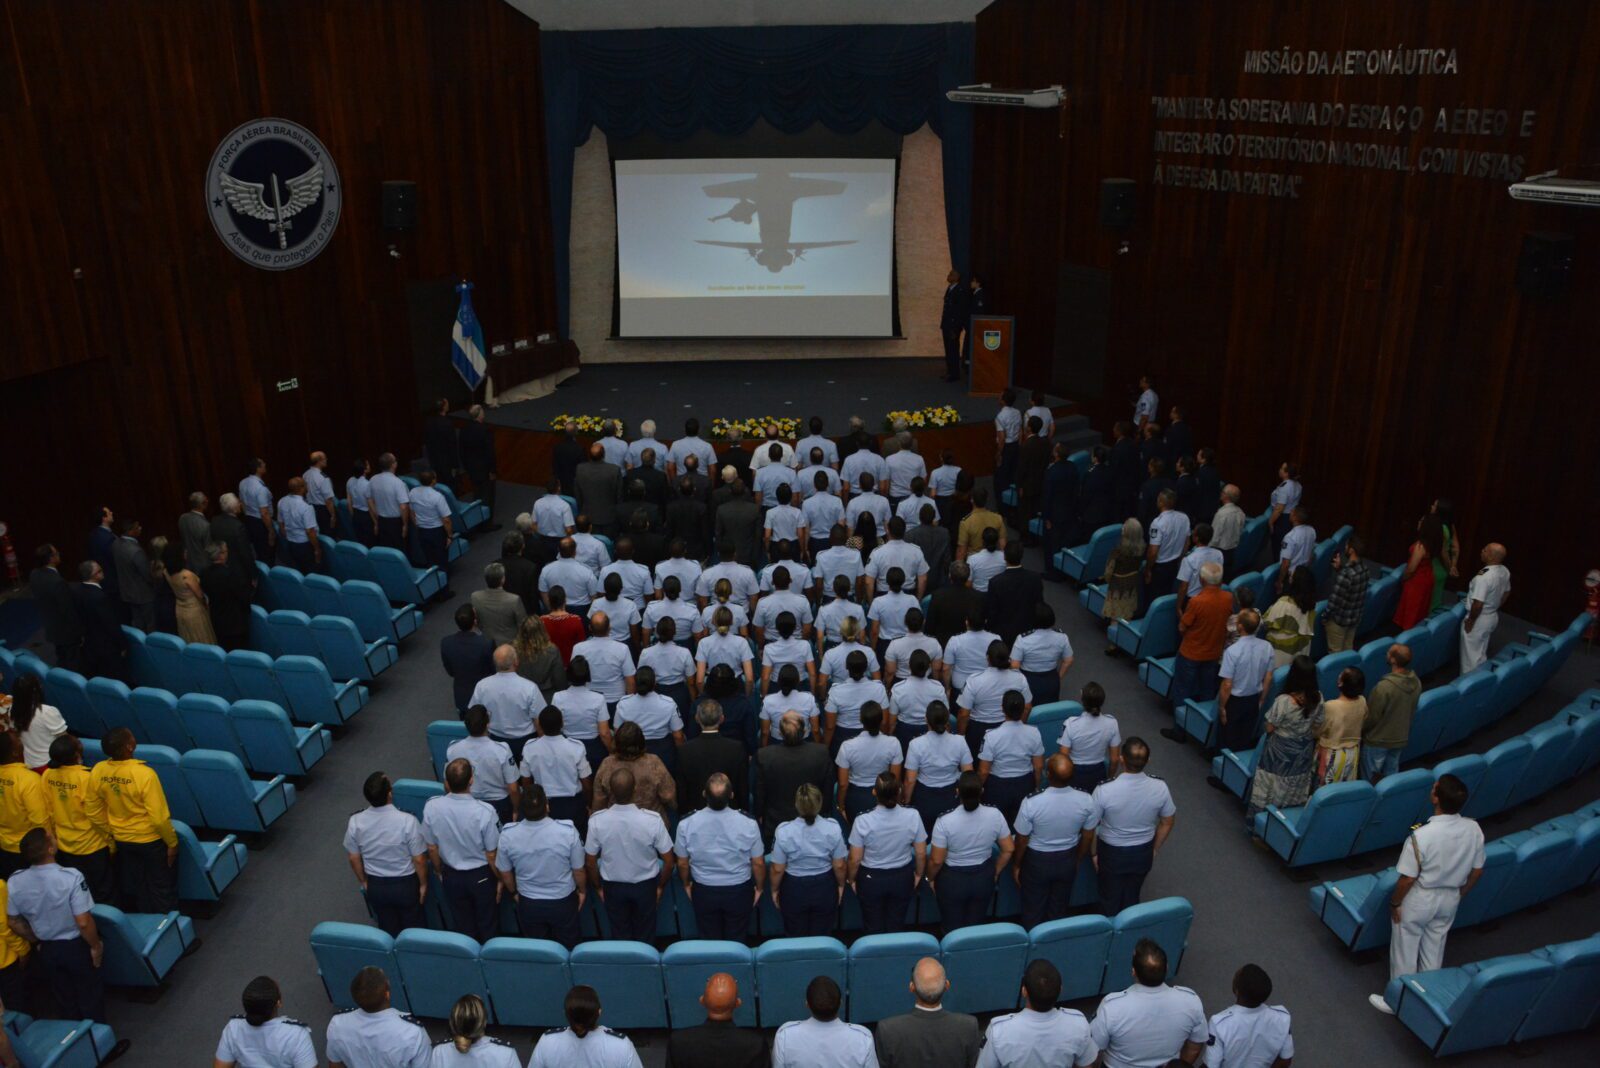 Brazil's Air Force University celebrates its 40th anniversary